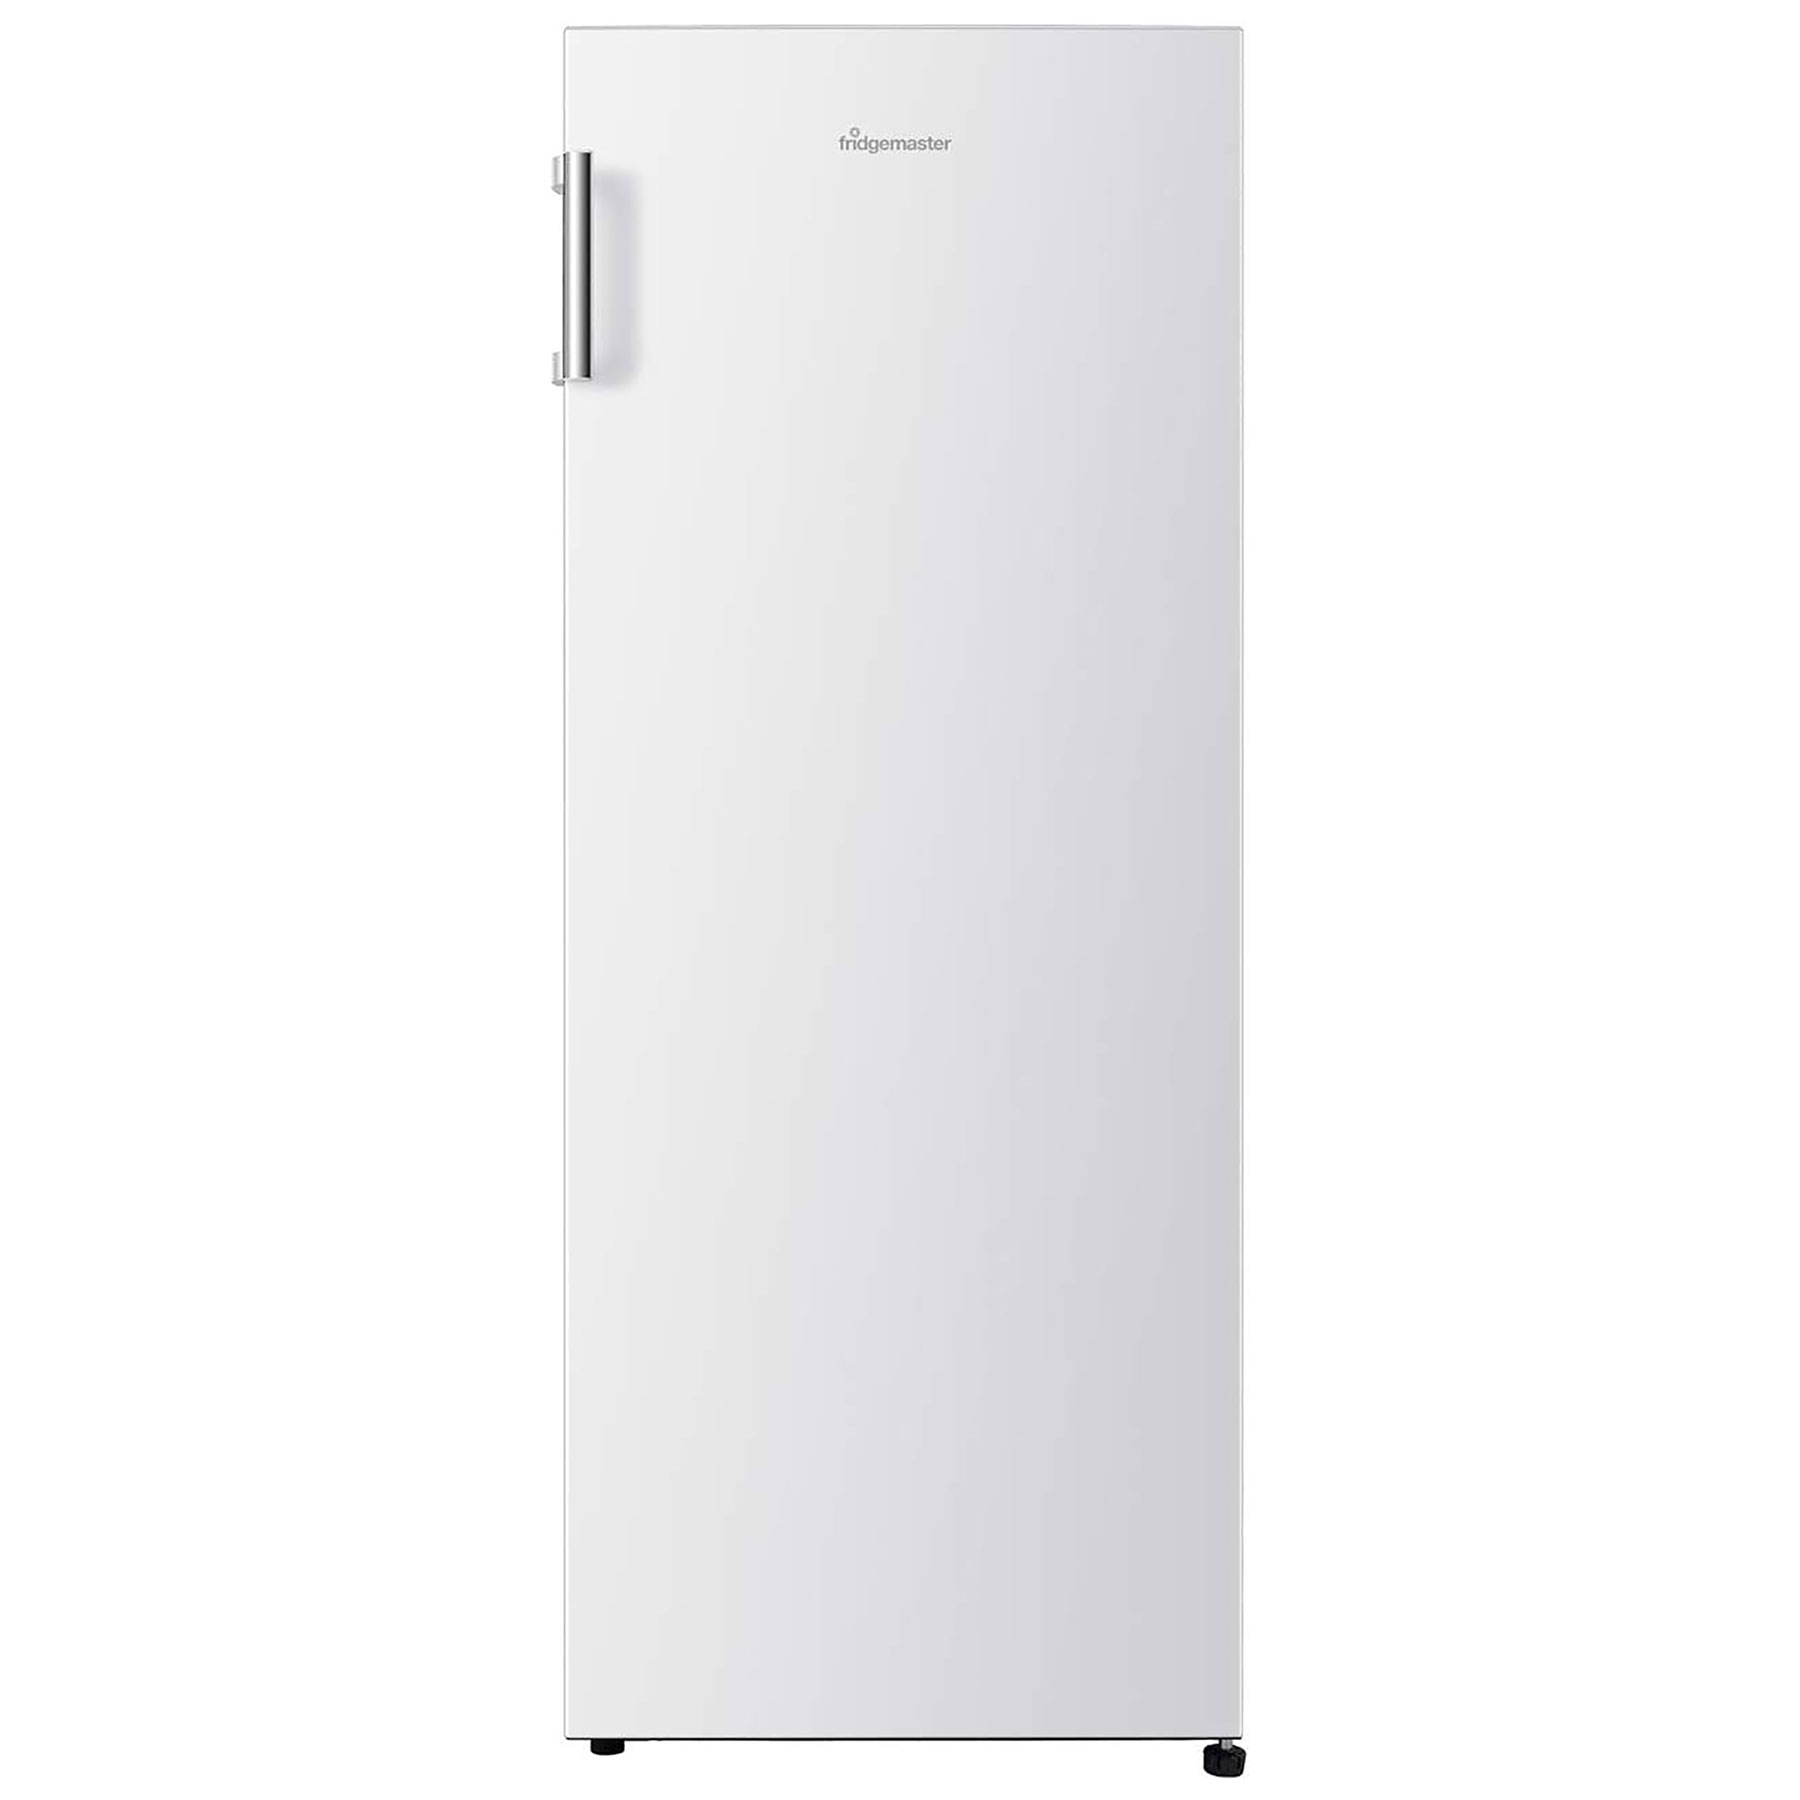 Image of Fridgemaster MTZ55153E 55cm Tall Freezer in White 1 43m E Rated 165L